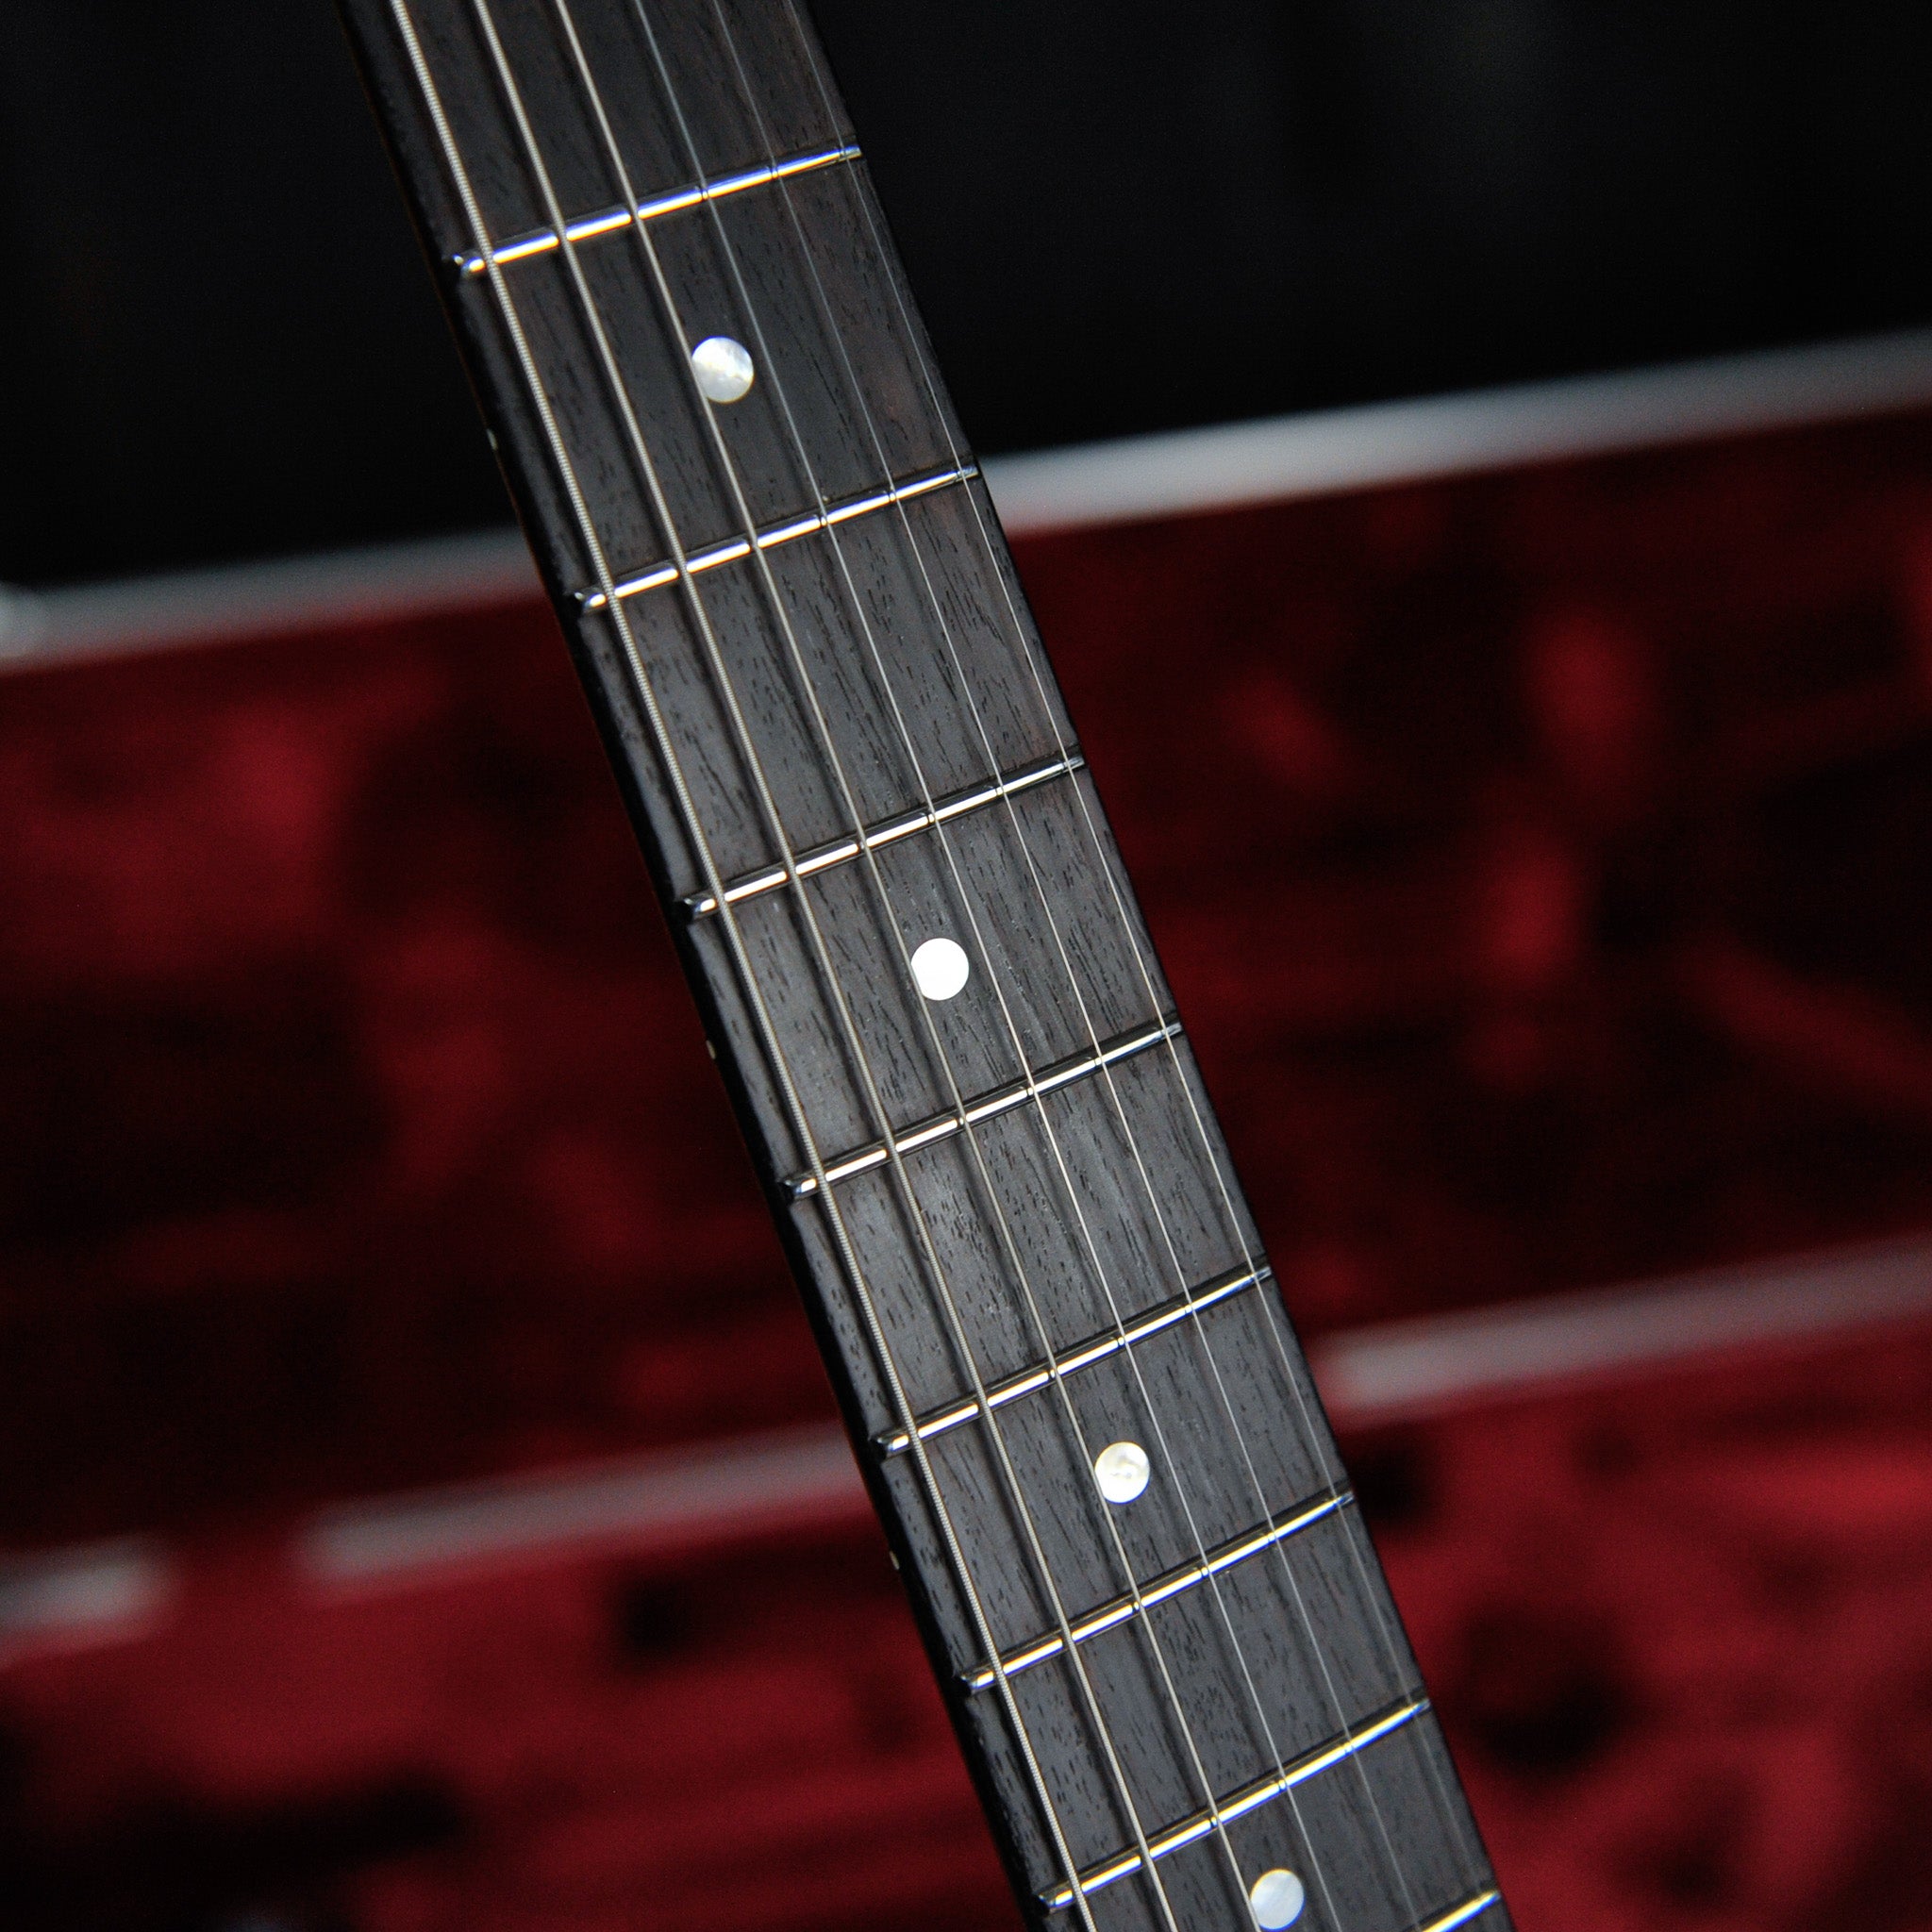 Ibanez TQMS1 Tom Quayle AZS Signature Electric Guitar (Celeste Blue) - Used